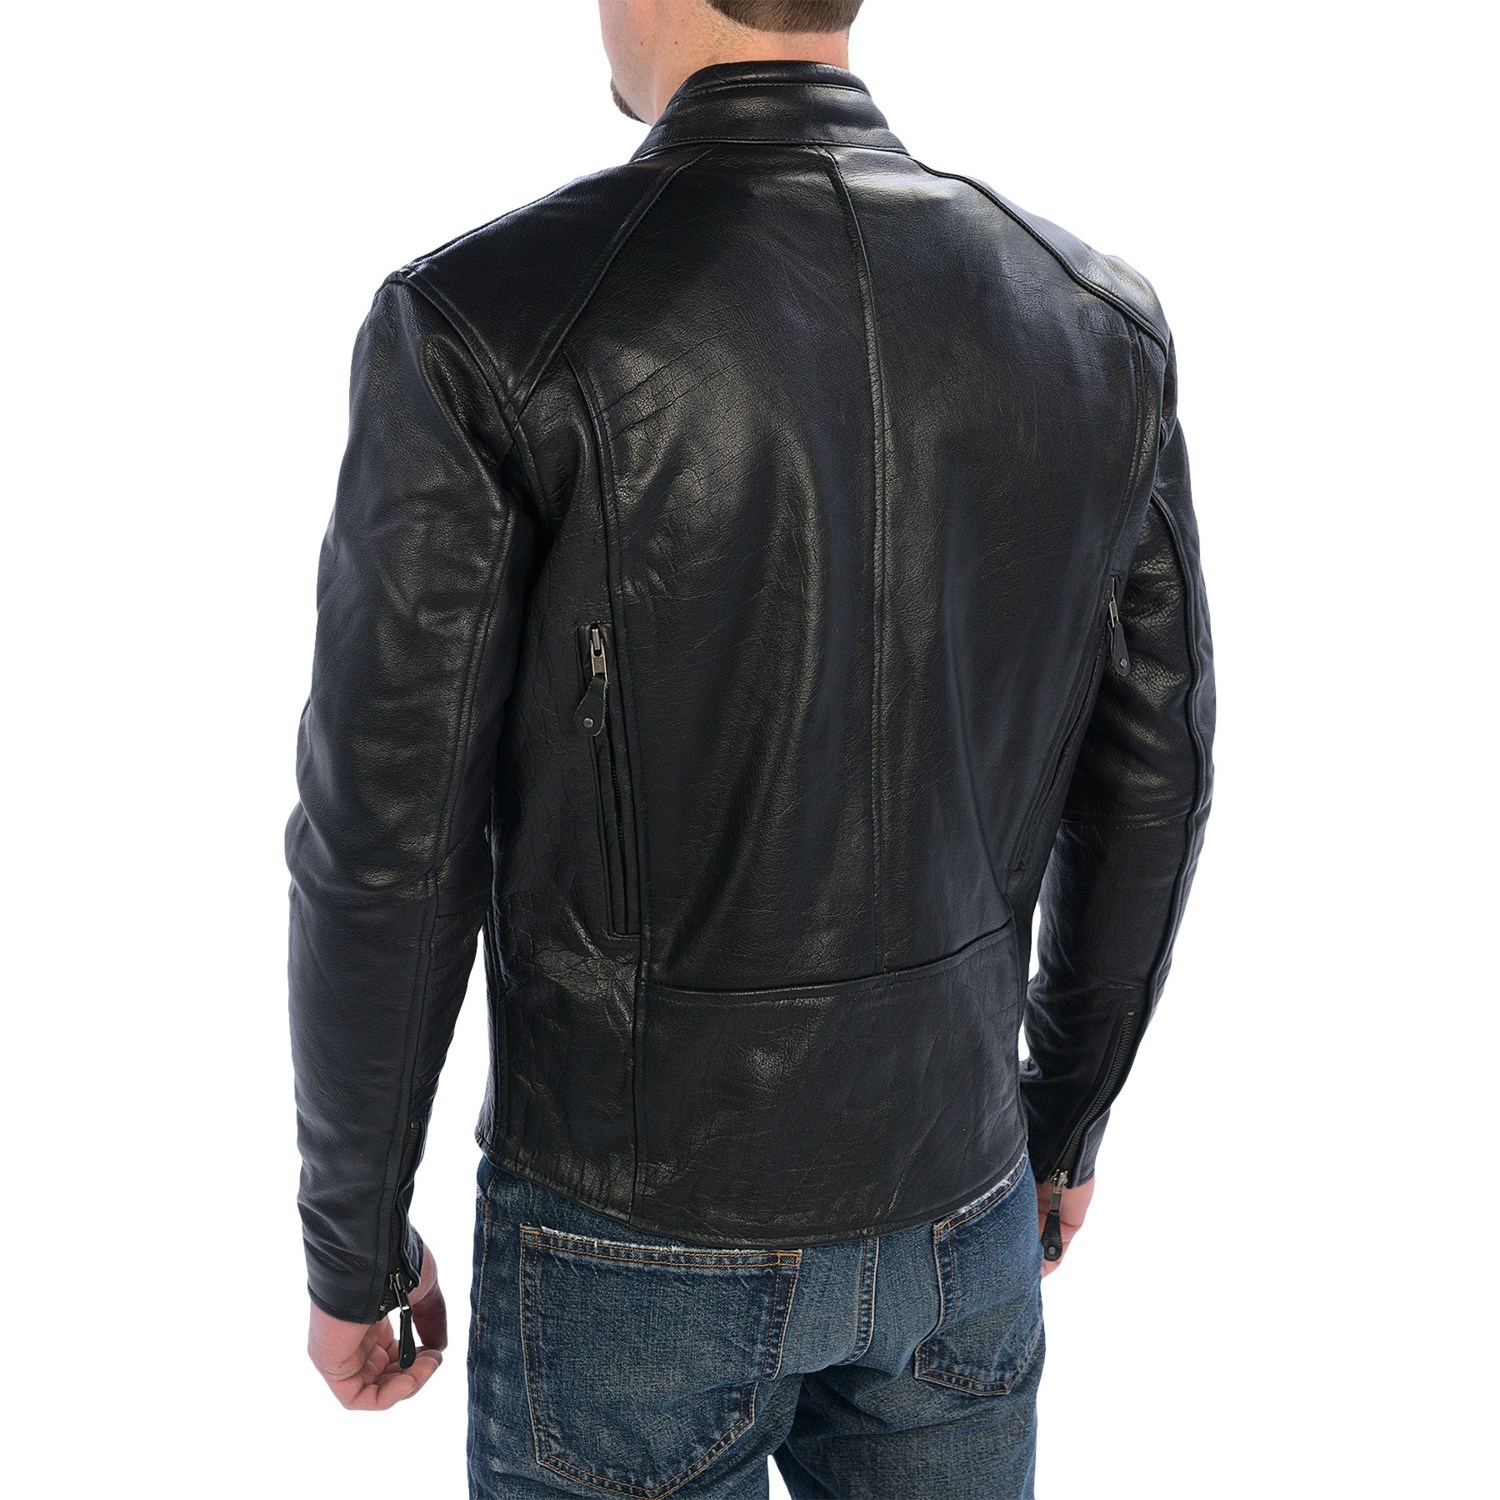 Mossi Cruiser Premium Leather Jacket (For Men) 8847F - Save 36%